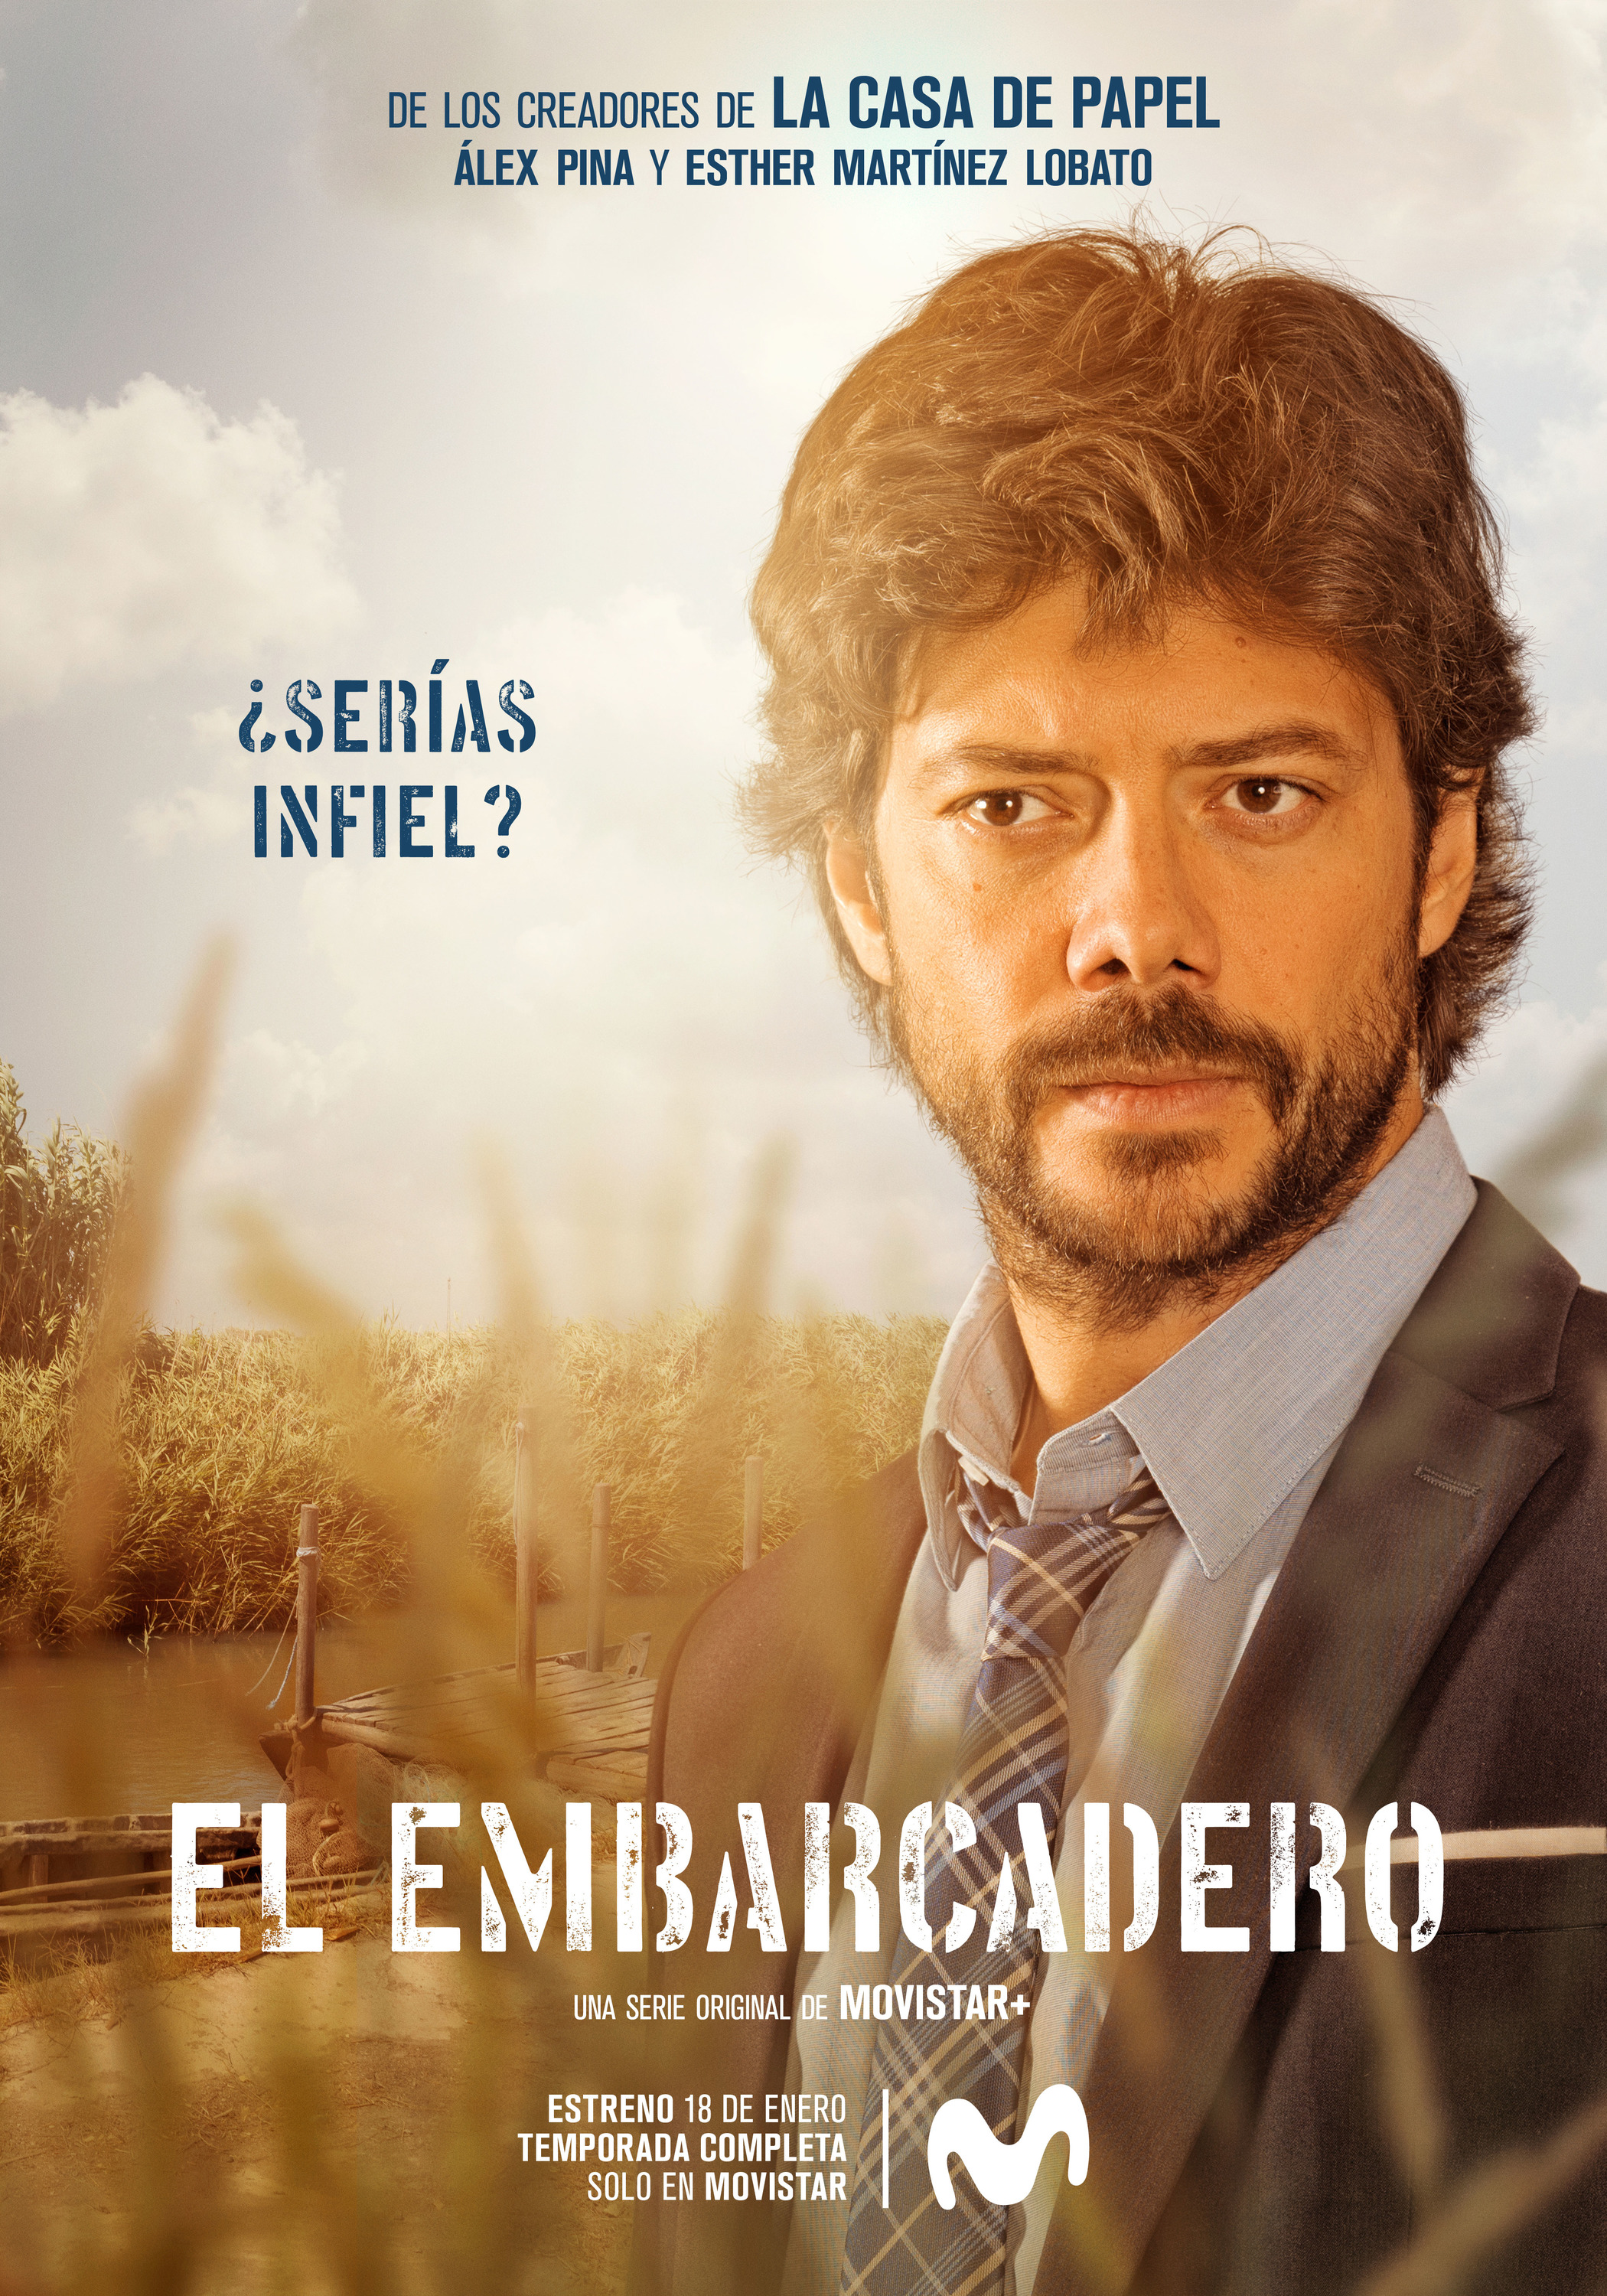 El embarcadero (#3 of 16): Mega Sized TV Poster Image - IMP Awards